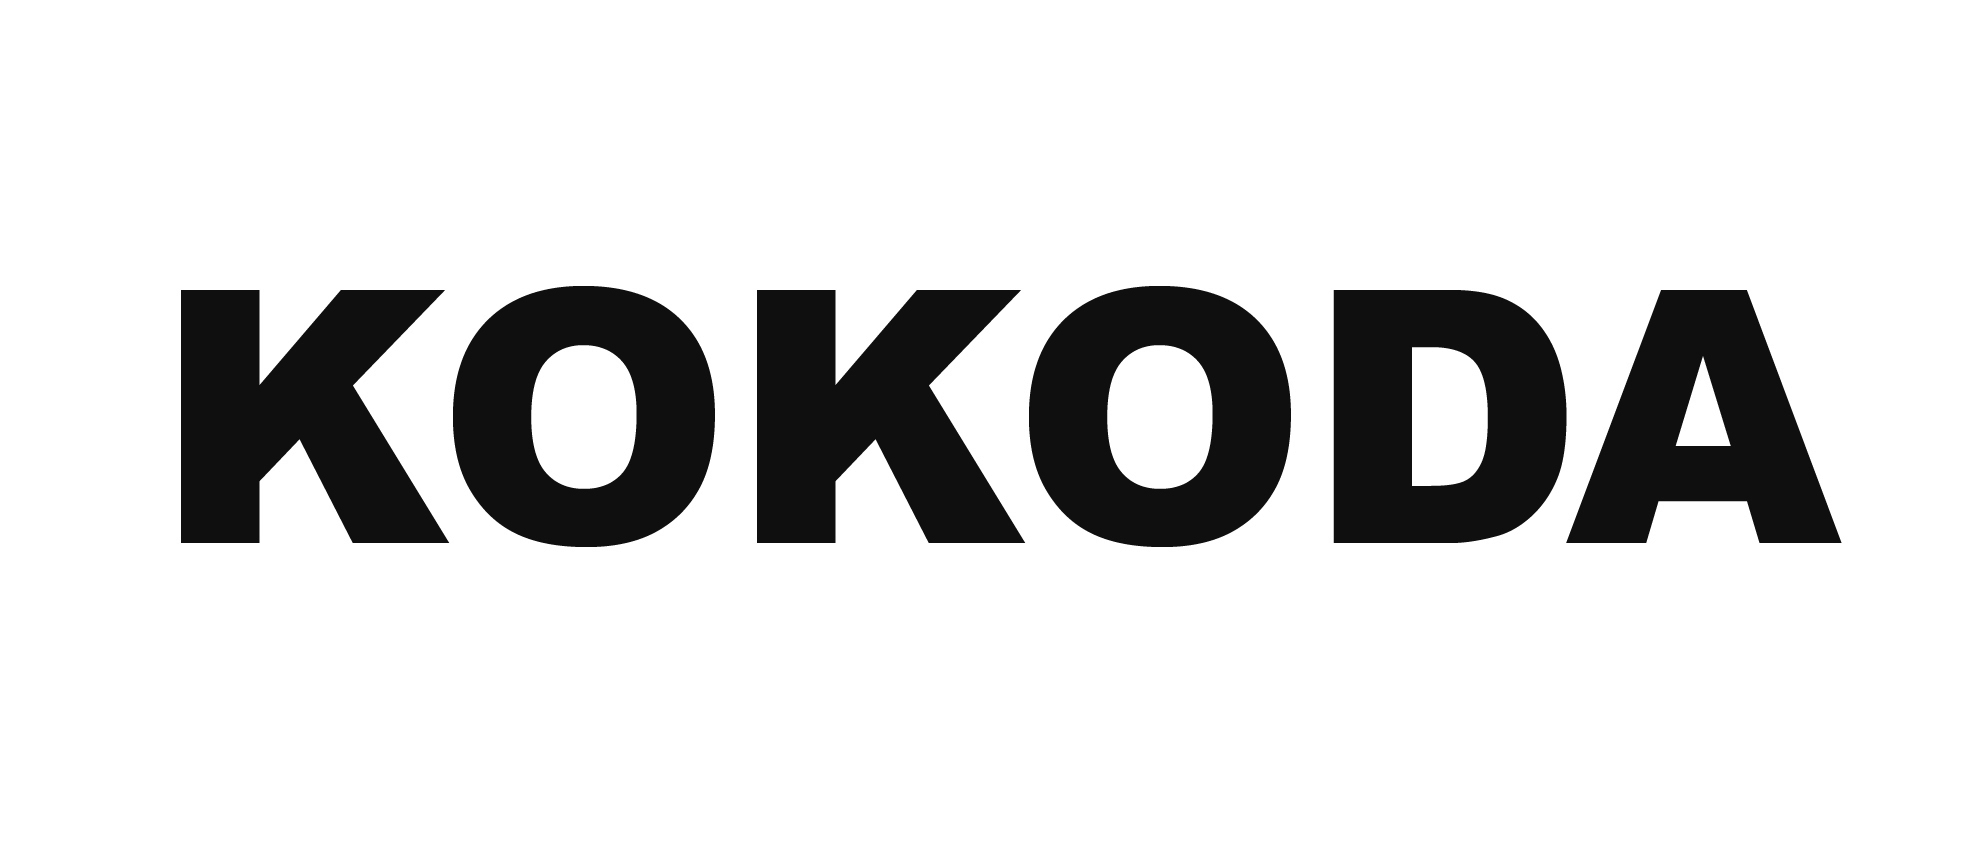 Kokoda logo